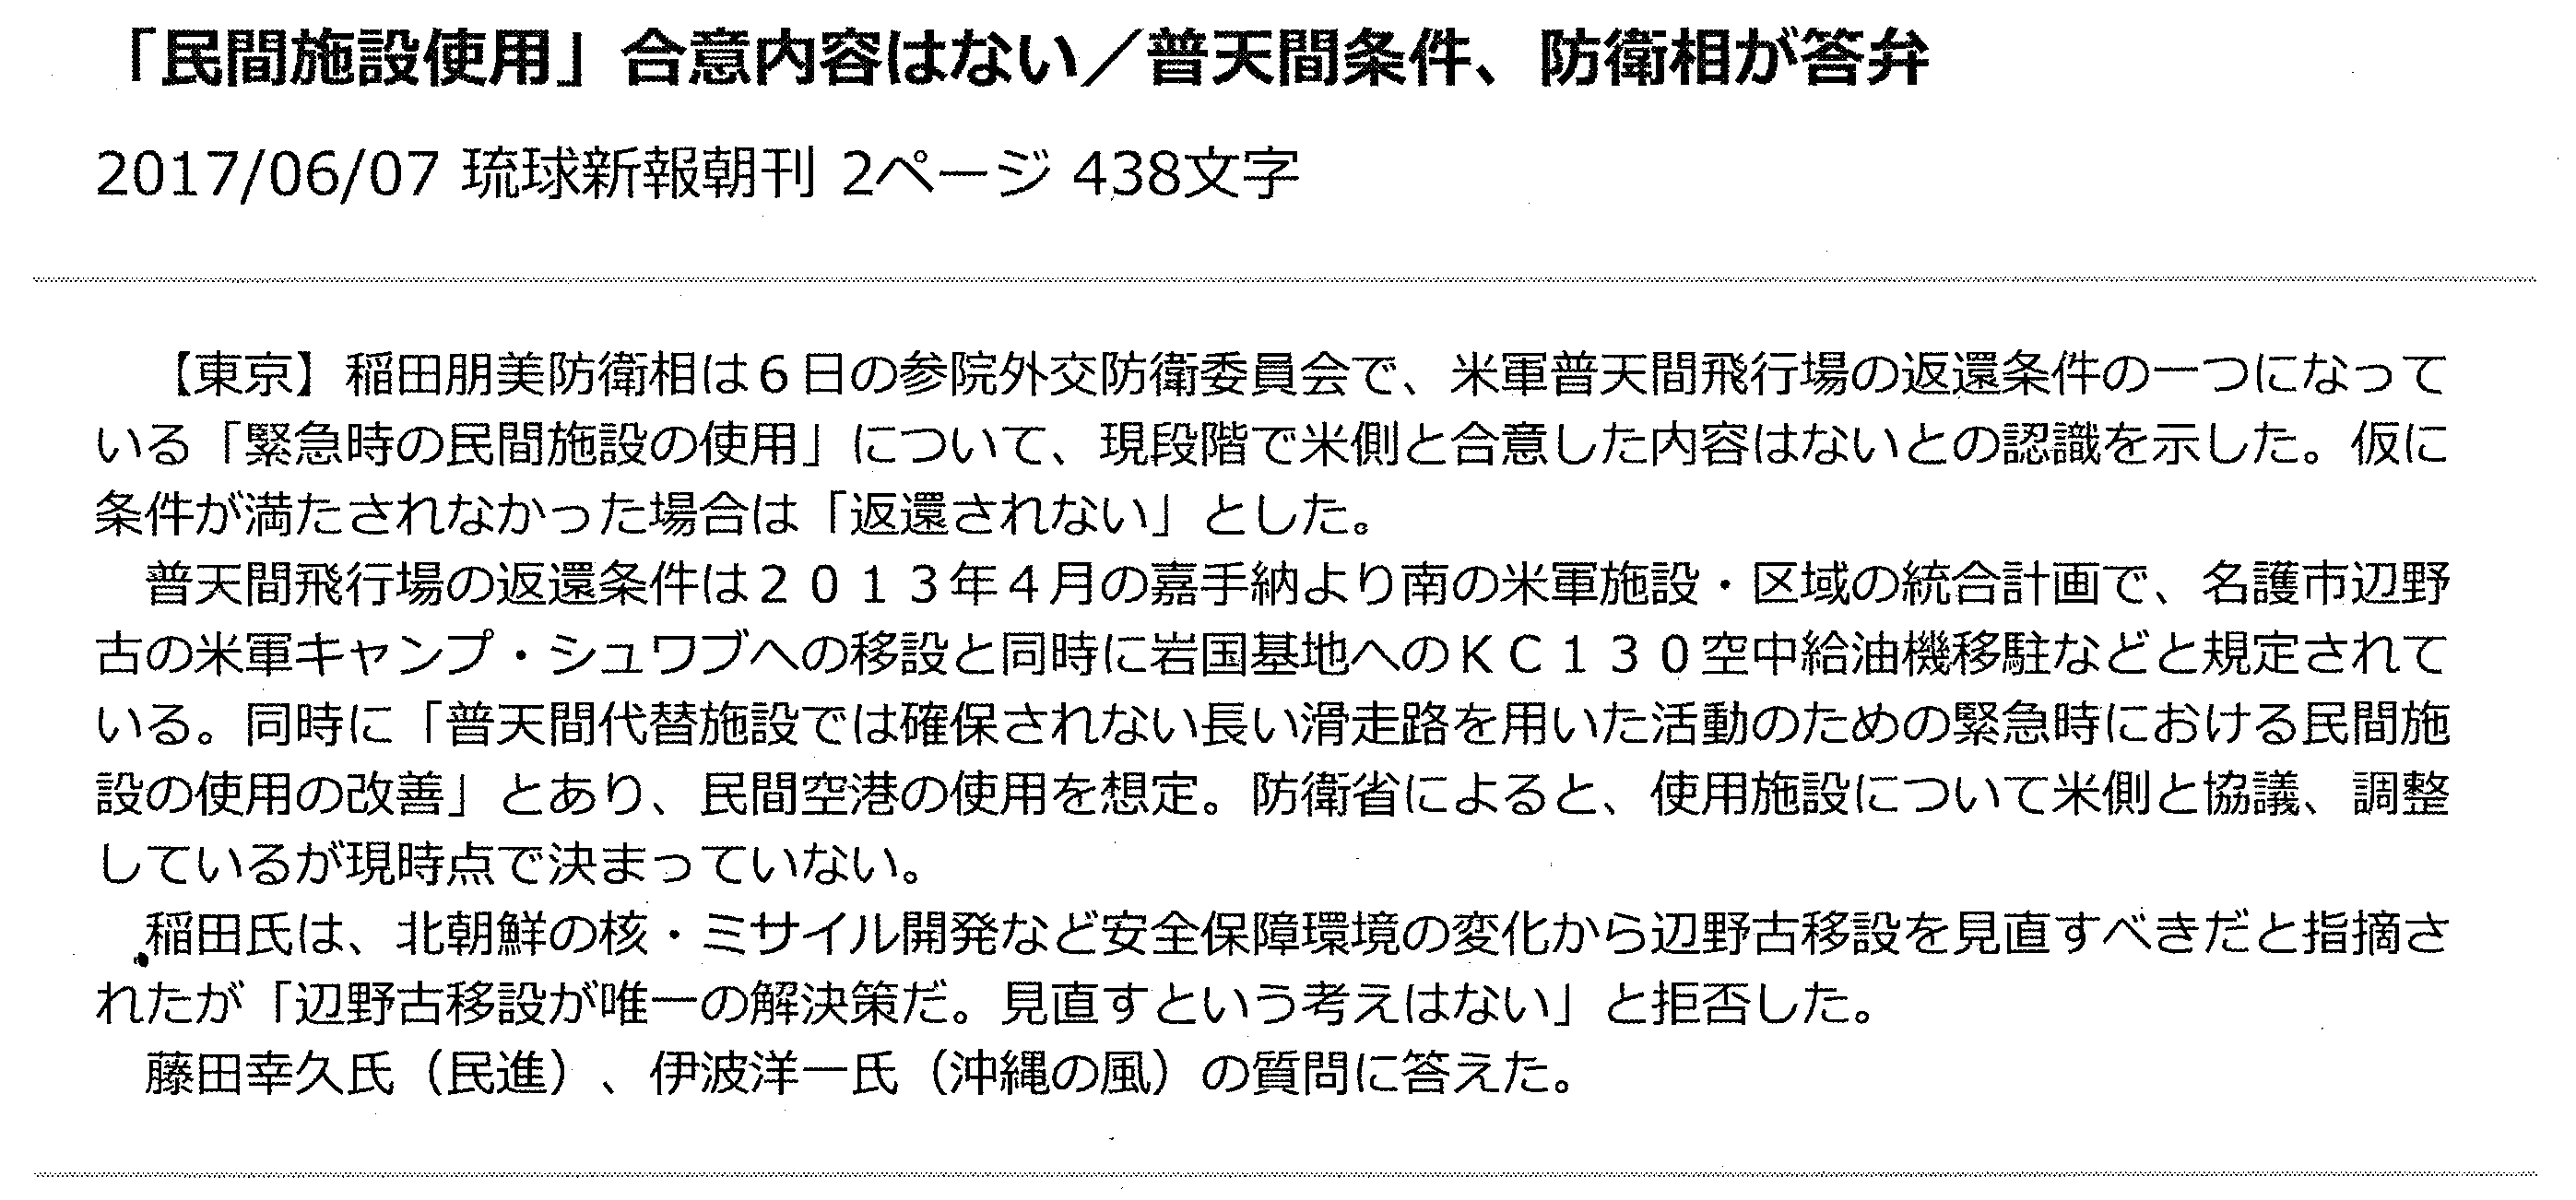 【琉球新報】「民間施設使用」合意内容はない/普天間条件、防衛相が答弁